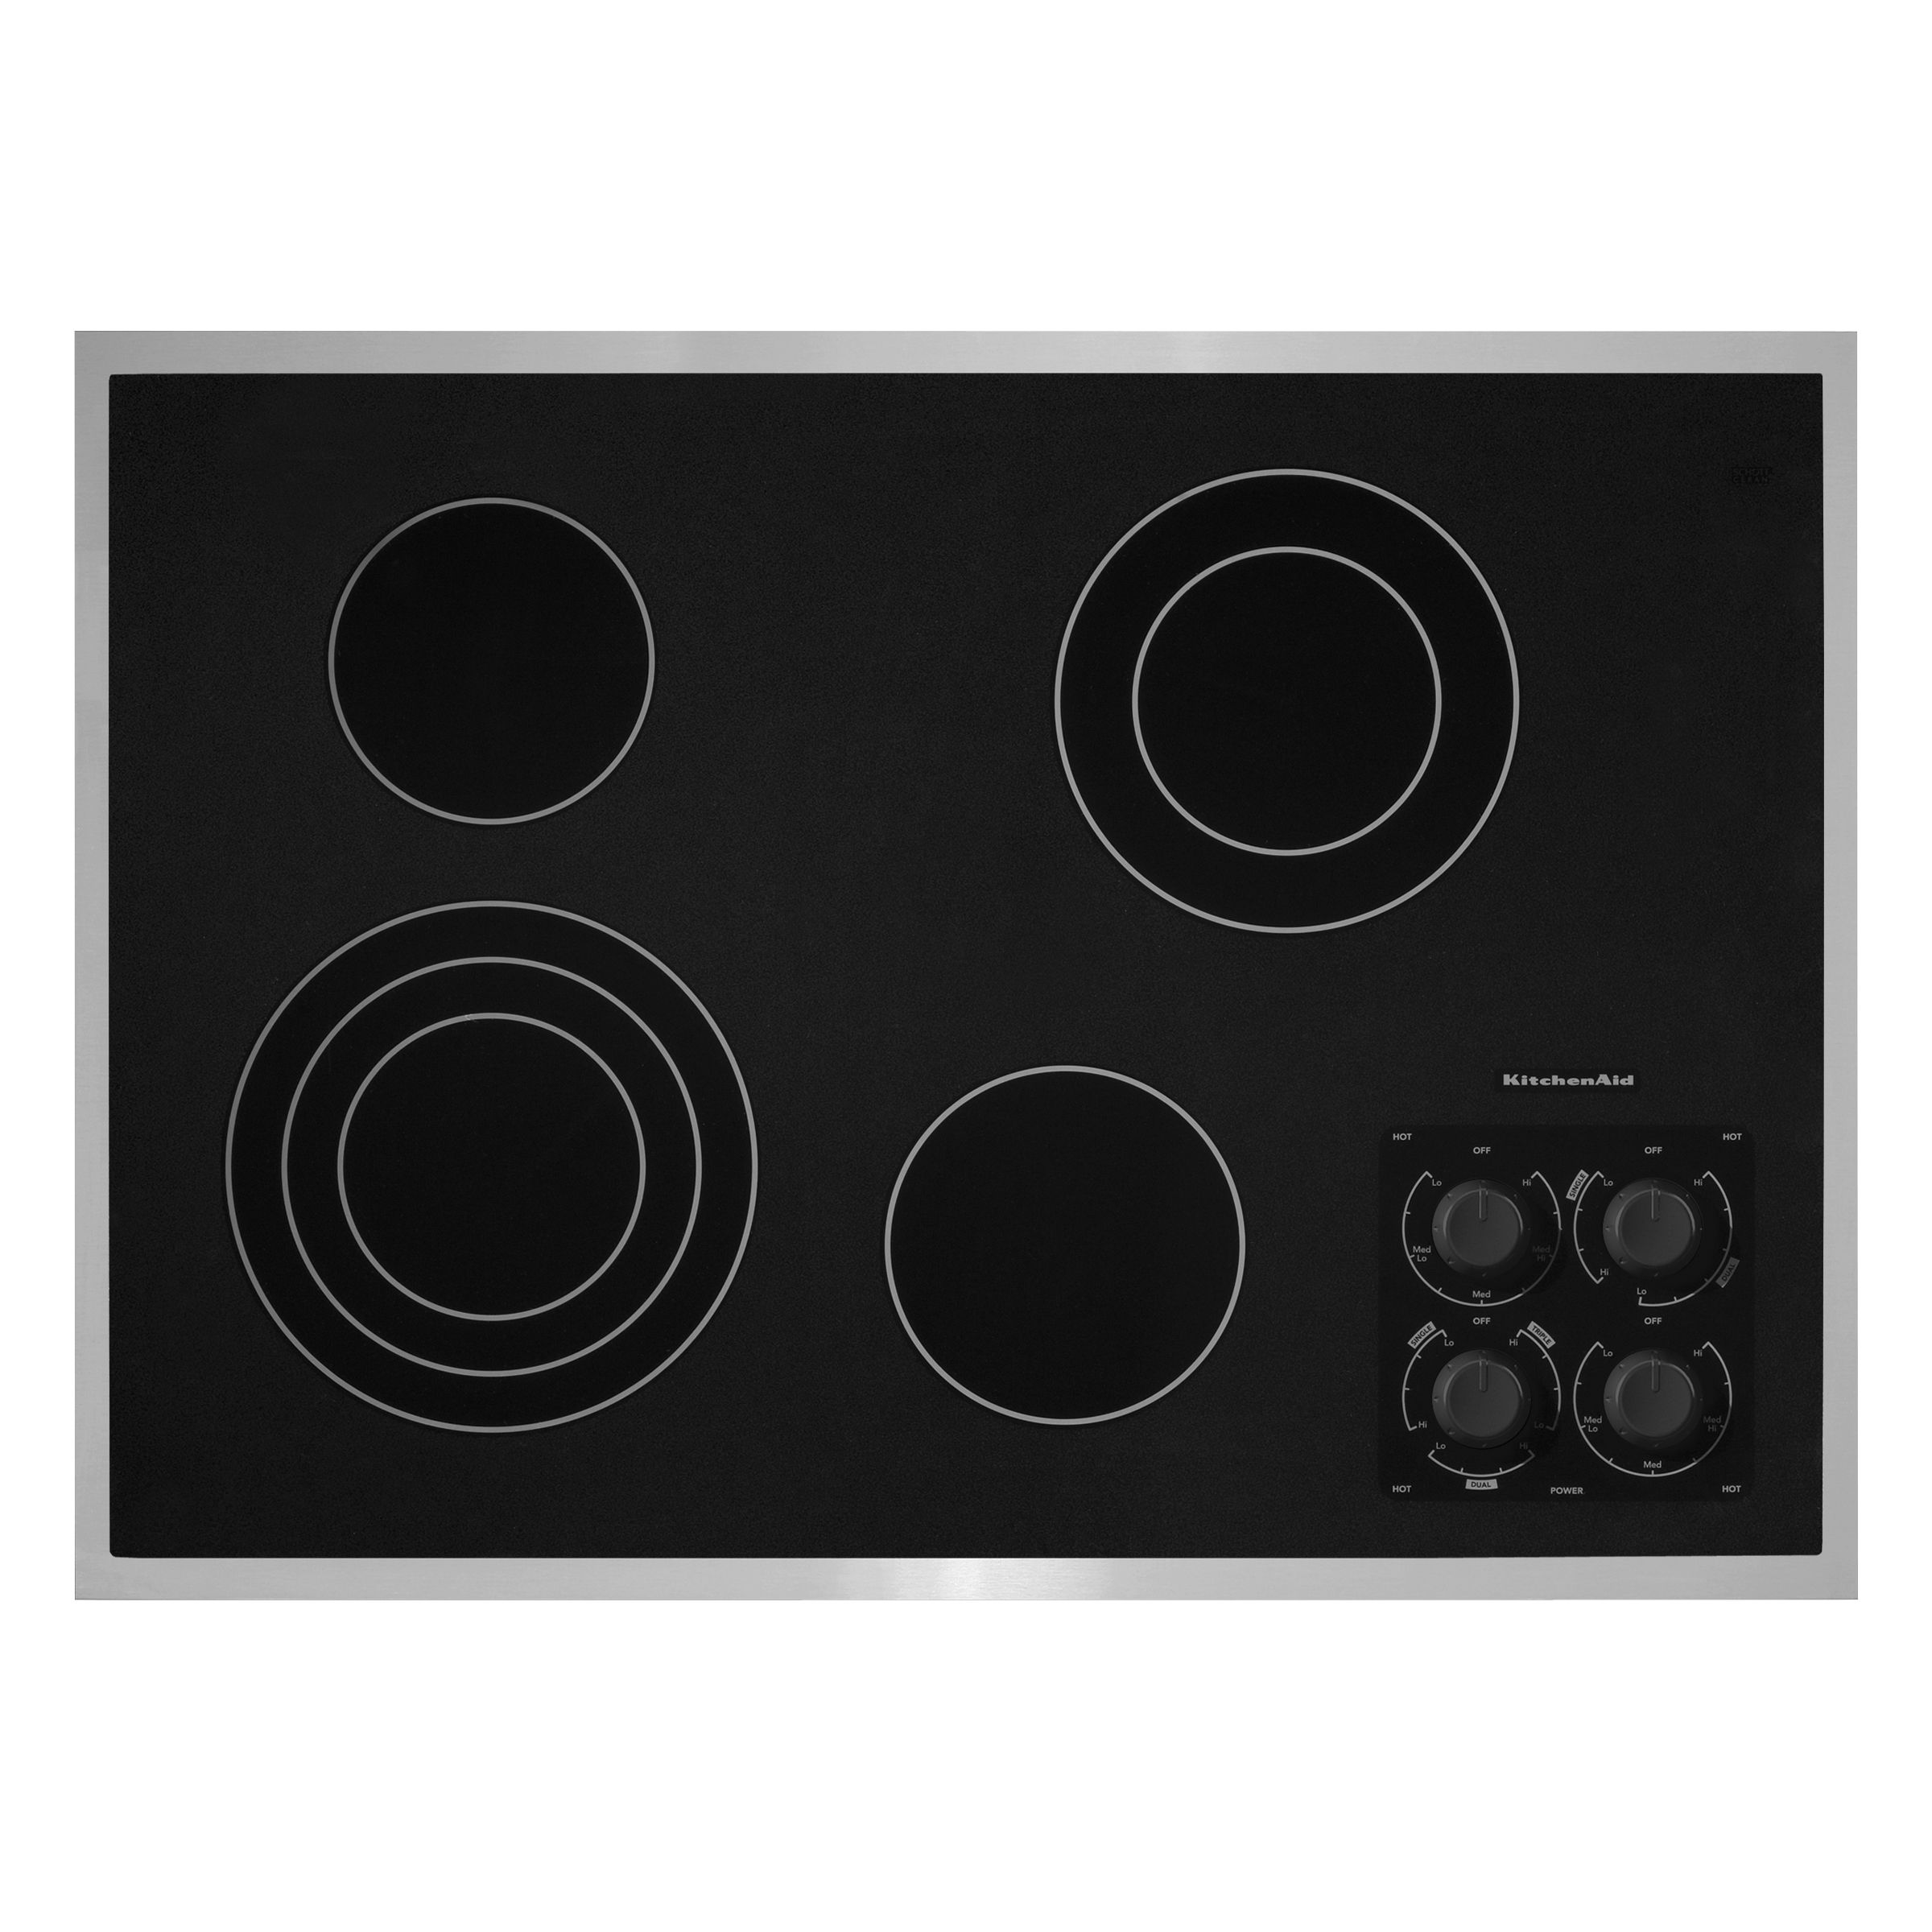 Official Kitchenaid Cooktop Parts